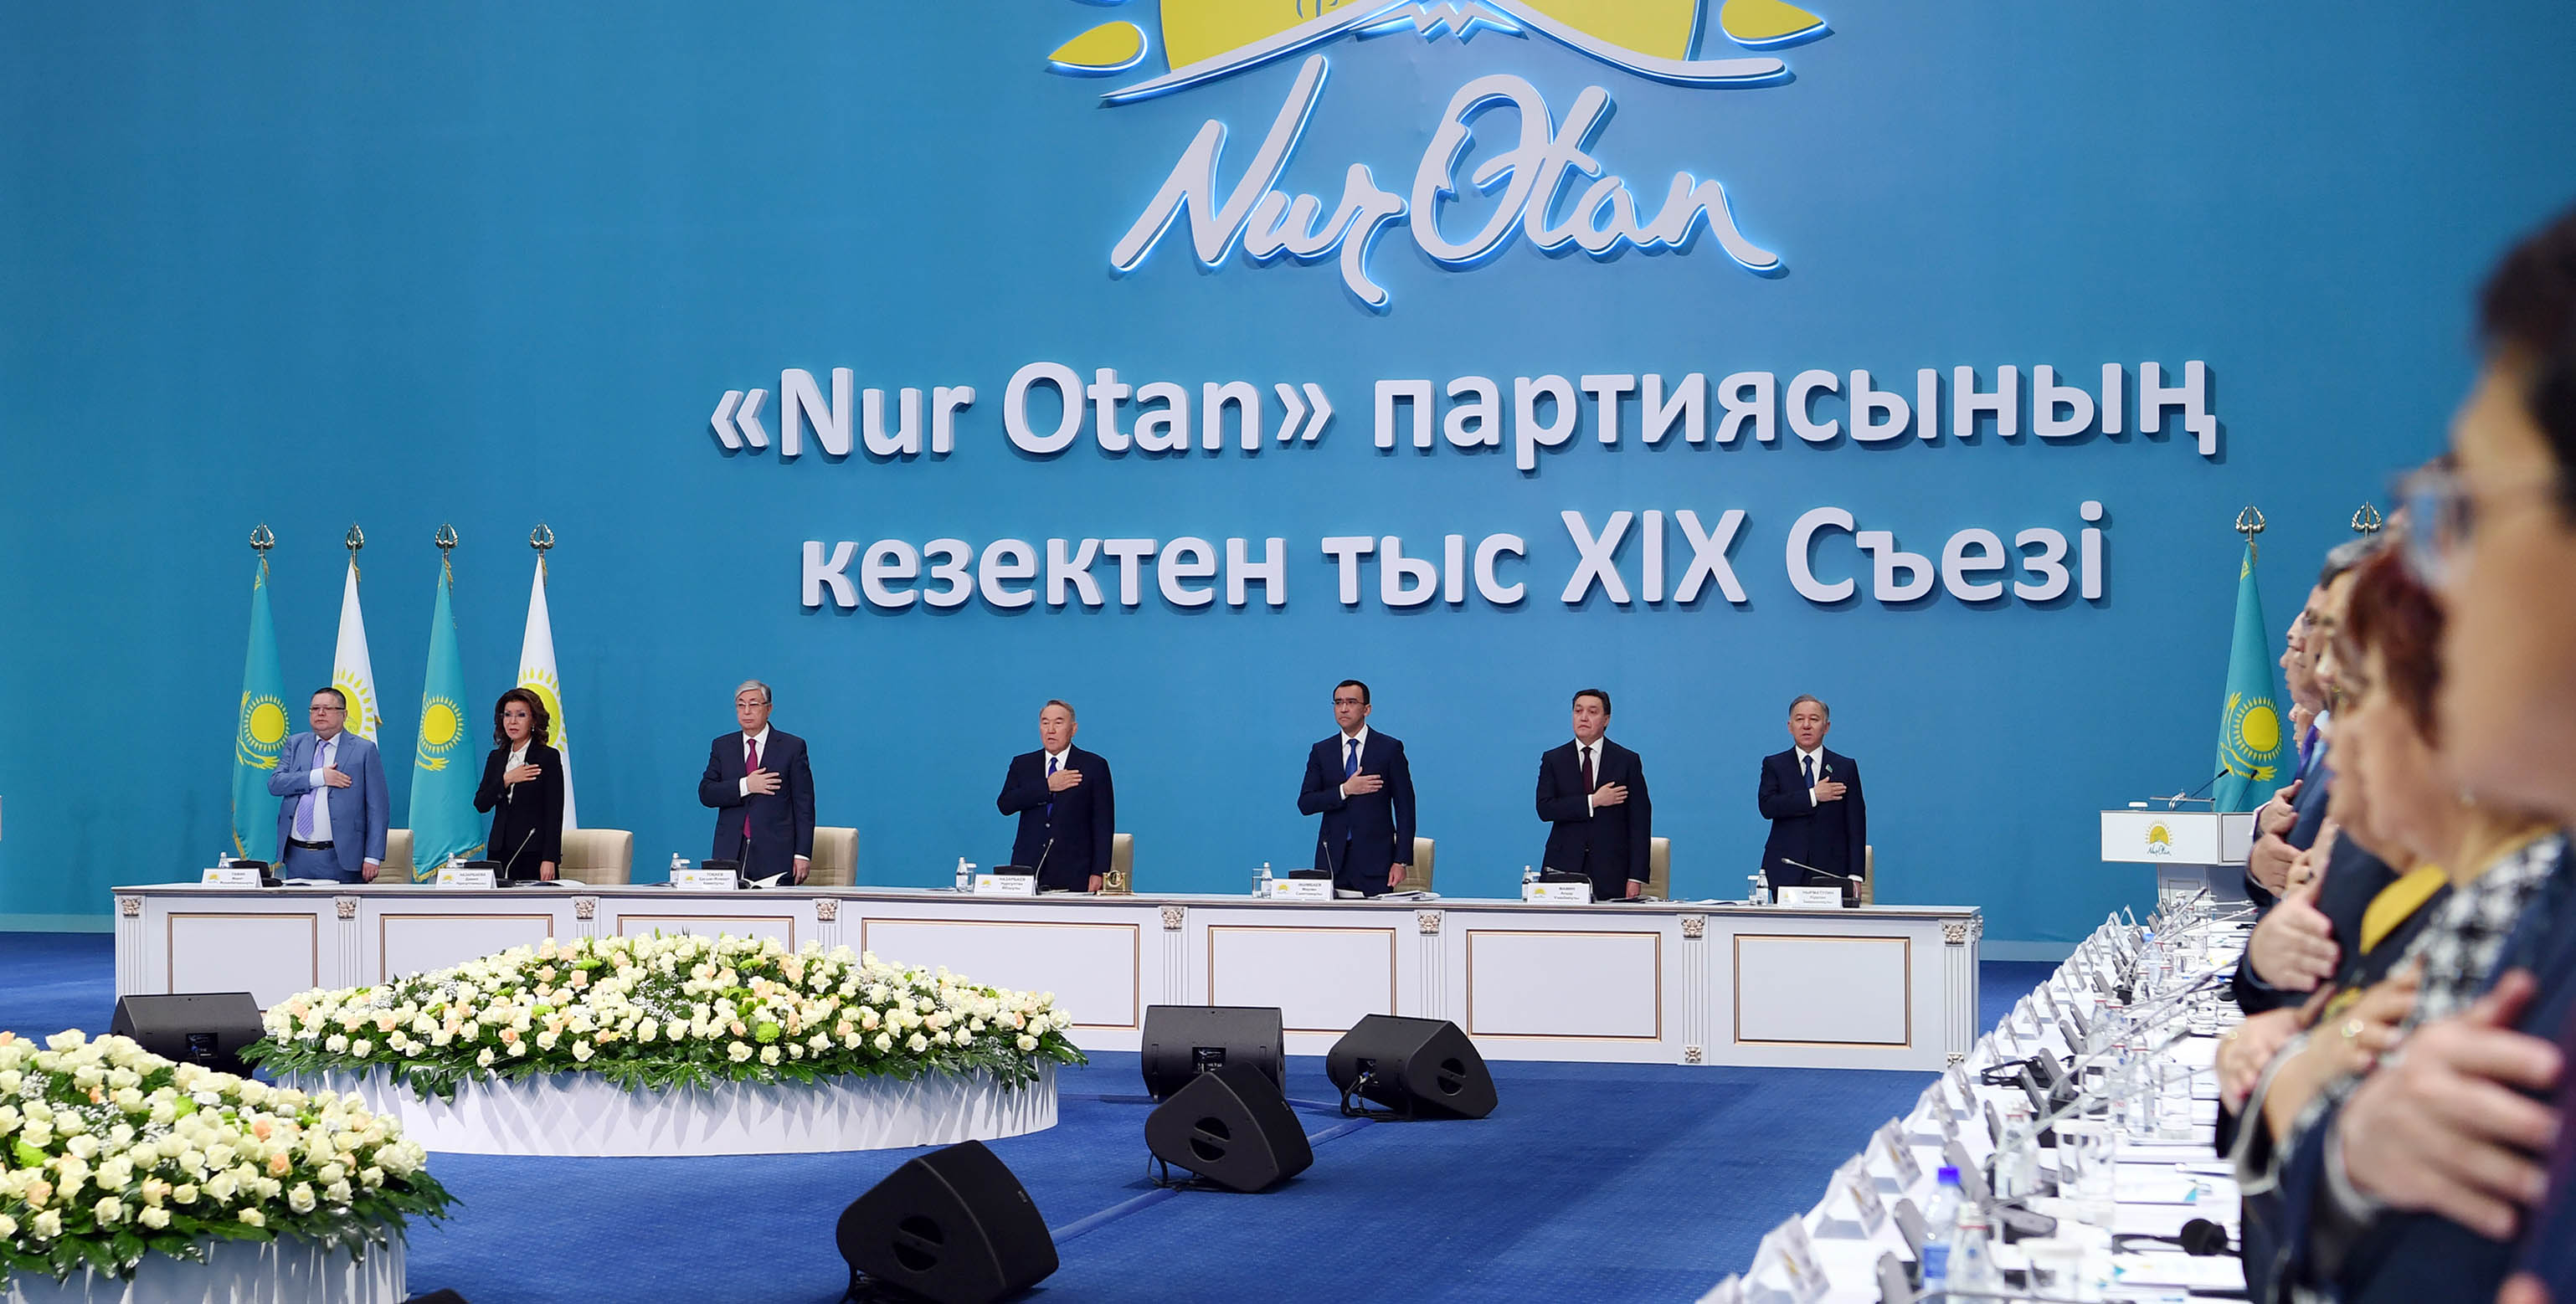 Extraordinary XIX Congress of the party Nur Otan chaired by Nursultan Nazarbayev held in Nur-Sultan